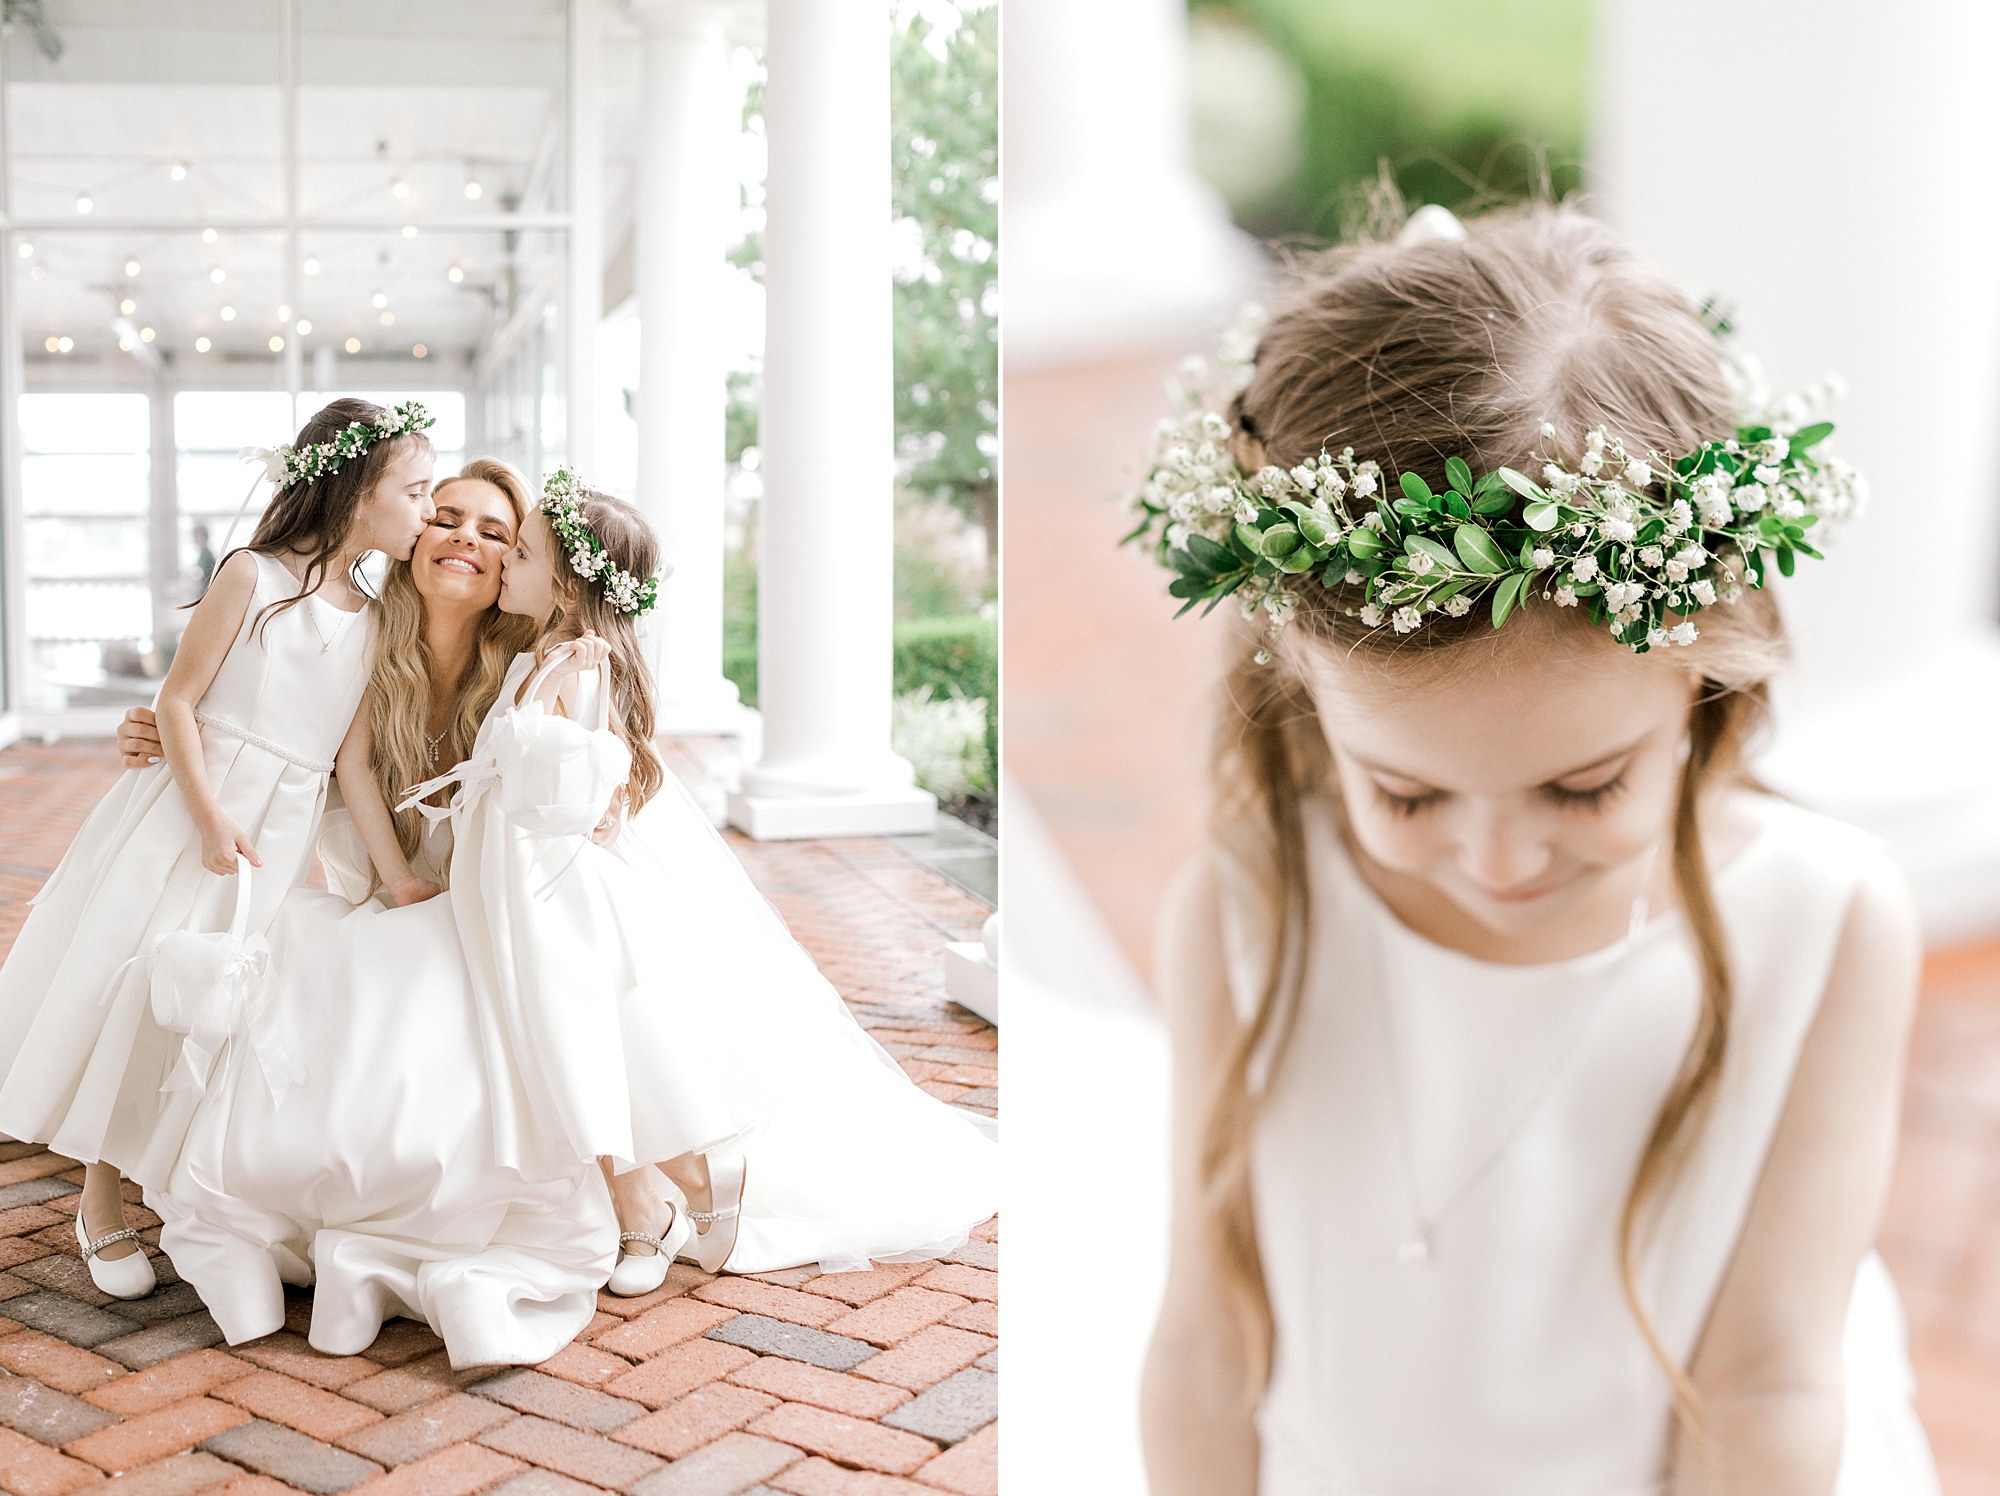 flower girls in green and white flower crowns kiss bride's cheek